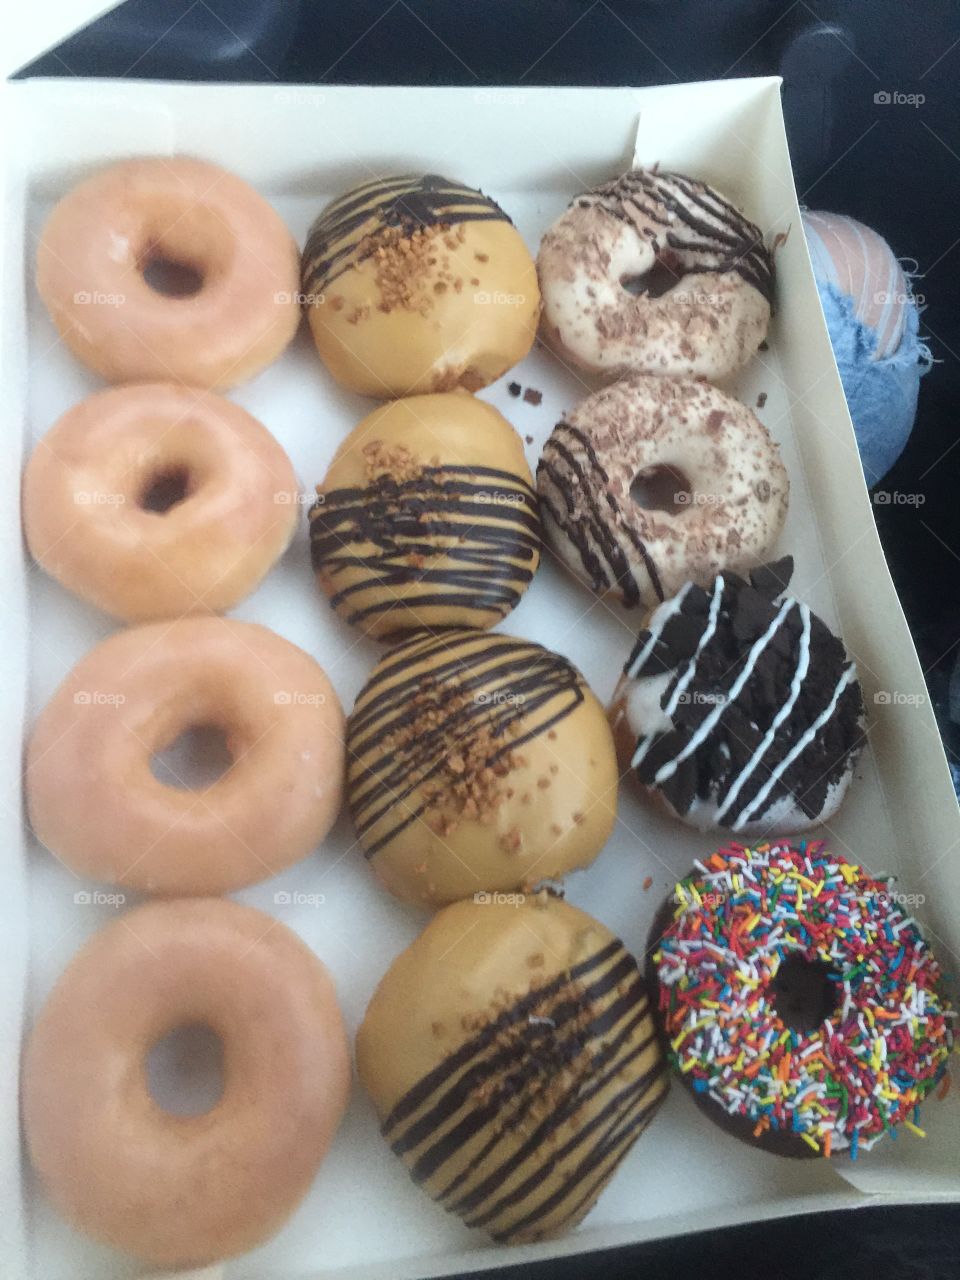 Delicious glazed donuts from krispy Kreme! 